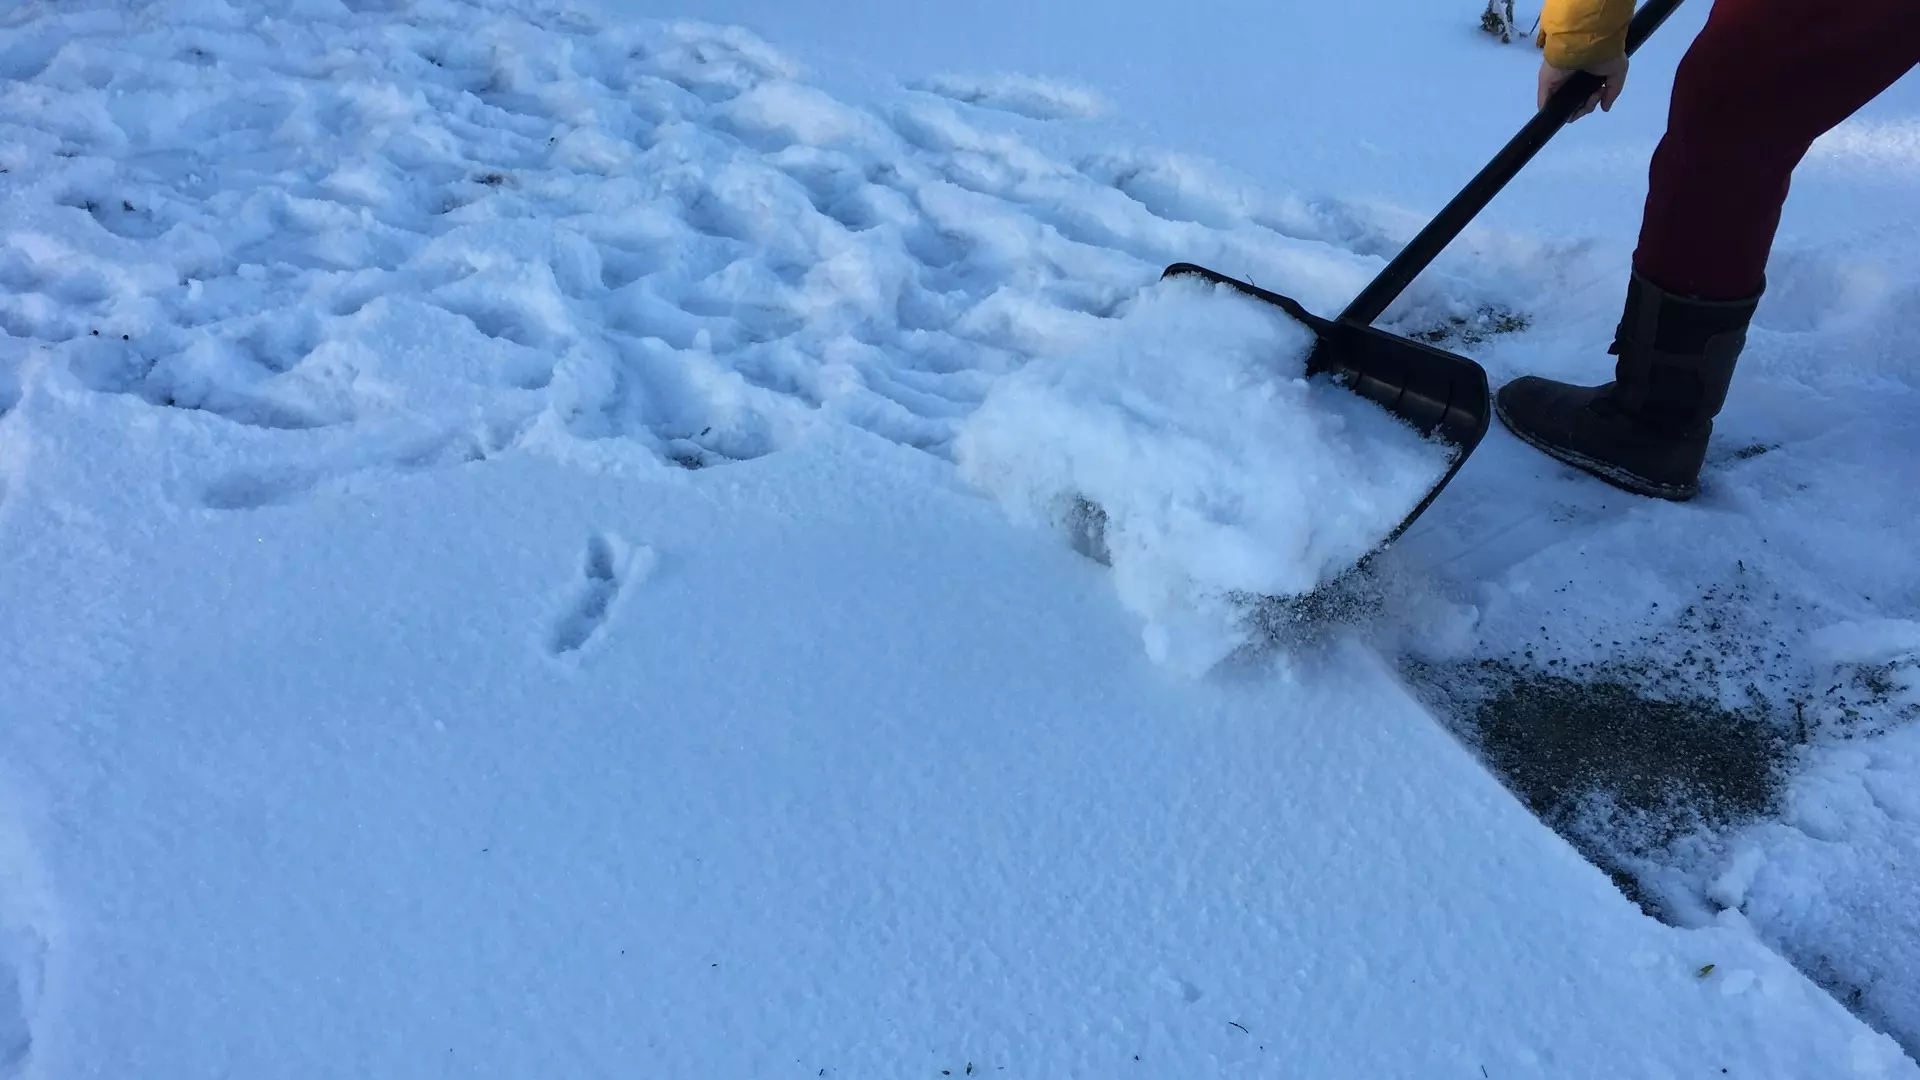 168 нарушений уборки снега во дворах выявили в Ижевске